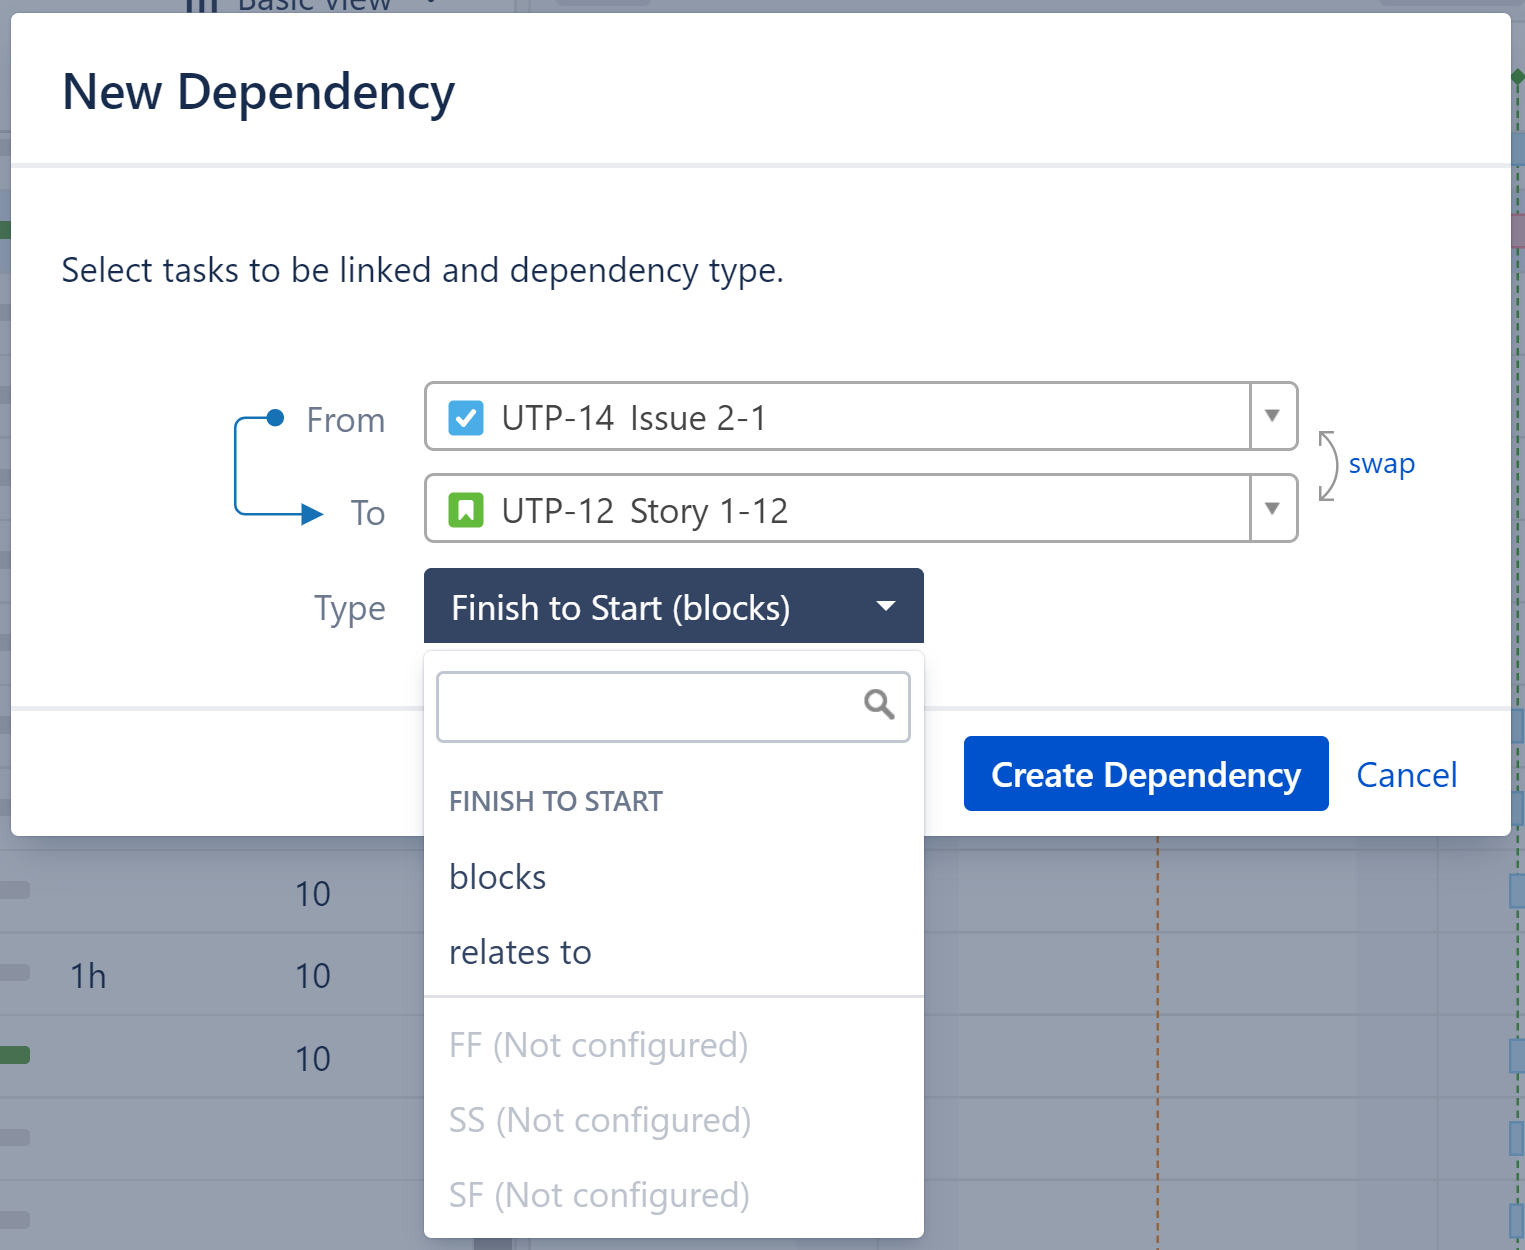 Dependency types not configured